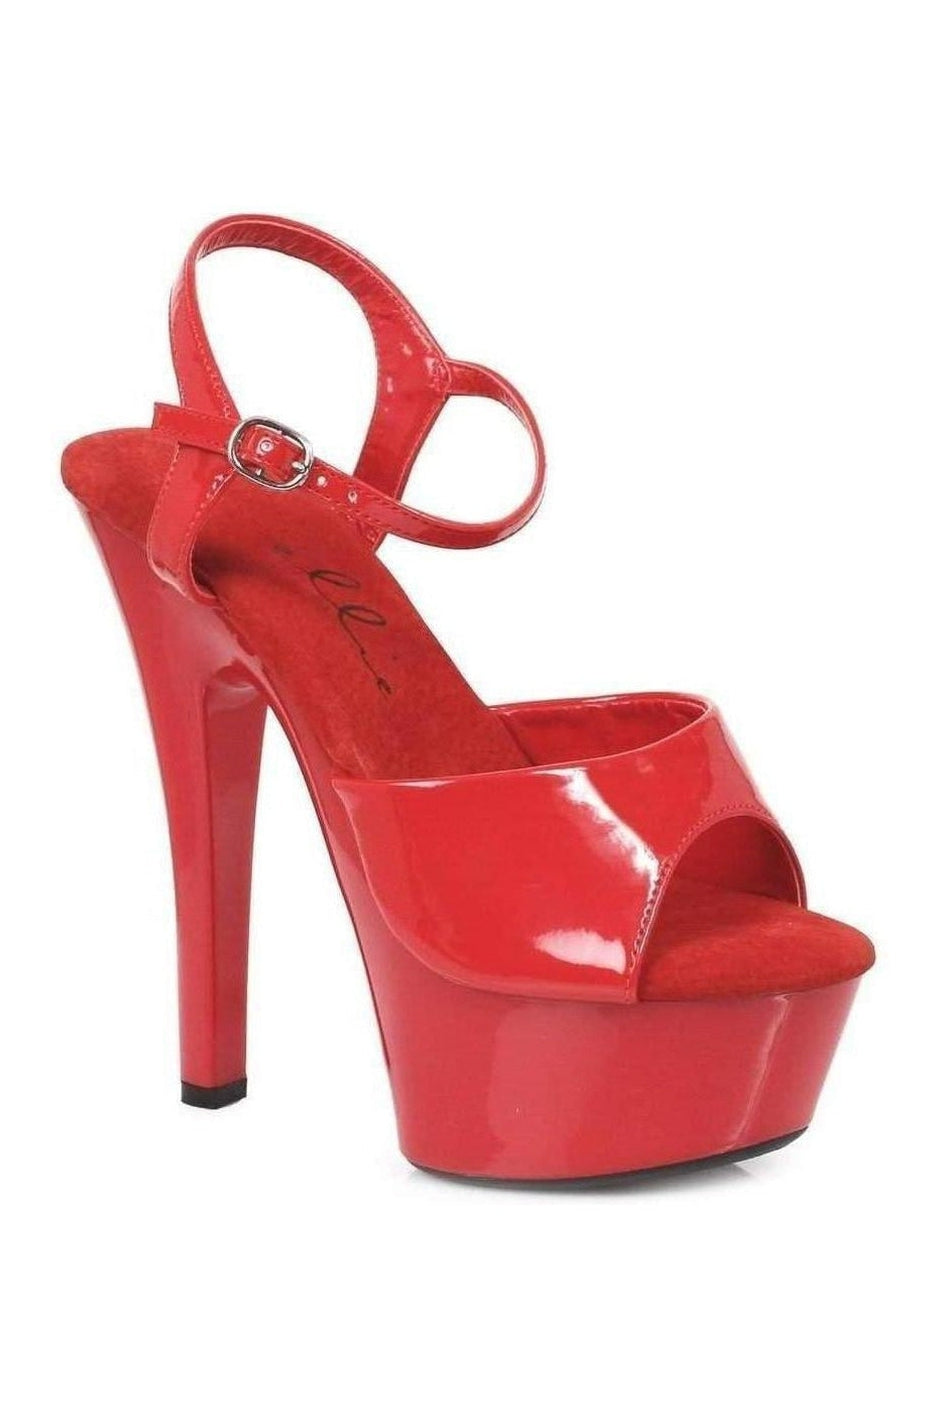 601-JULIET Platform Sandal | Red Patent-Ellie Shoes-Red-Sandals-SEXYSHOES.COM